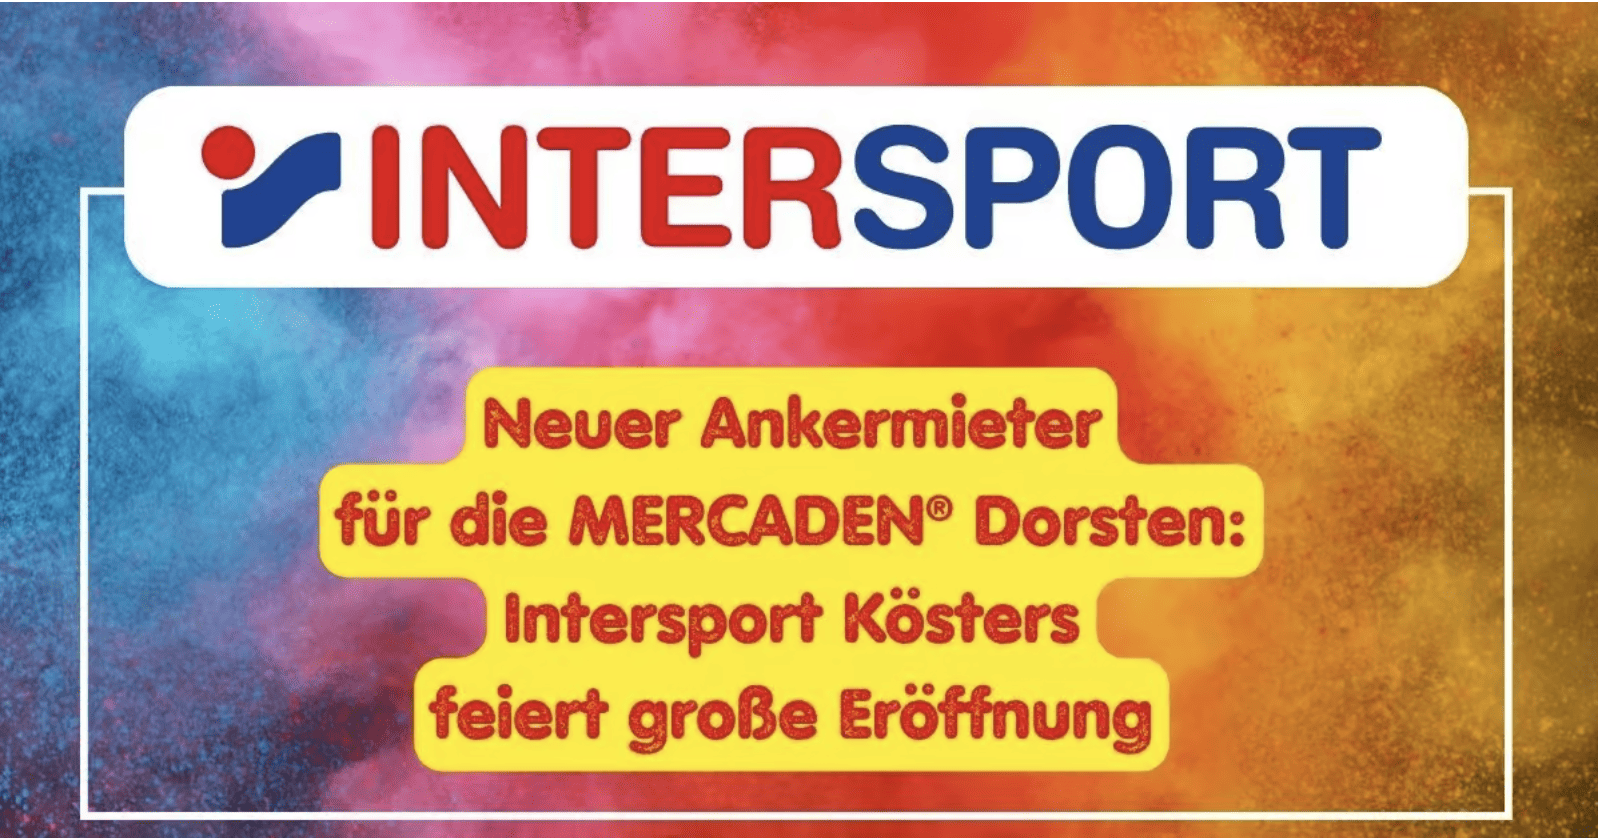 case<-Mercaden Dorsten - Intersport Kösters feiert große Eröffnung